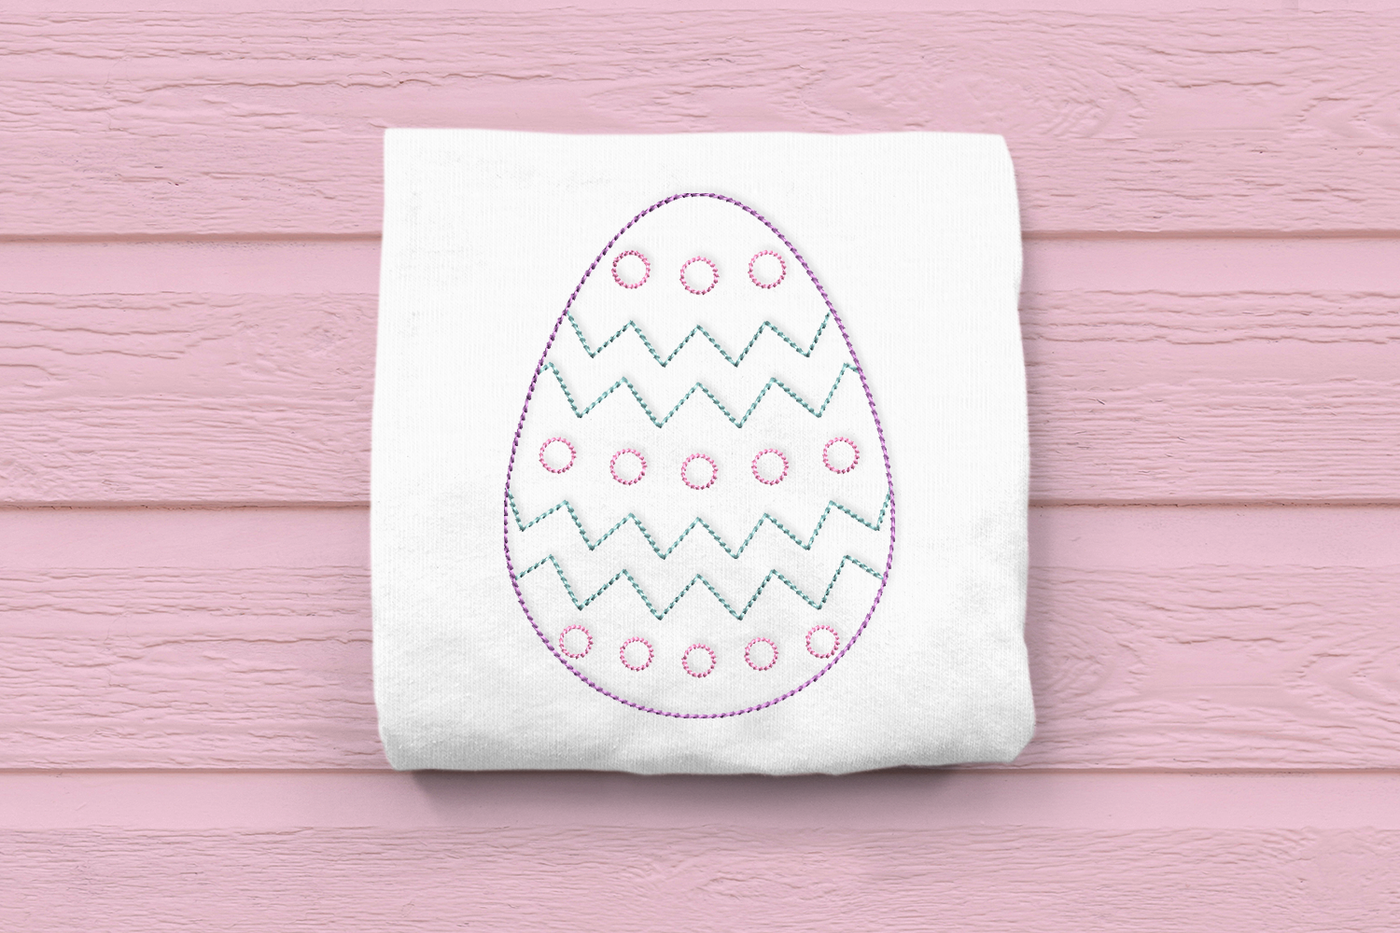 Linework Patterned Easter Egg Embroidery Design File